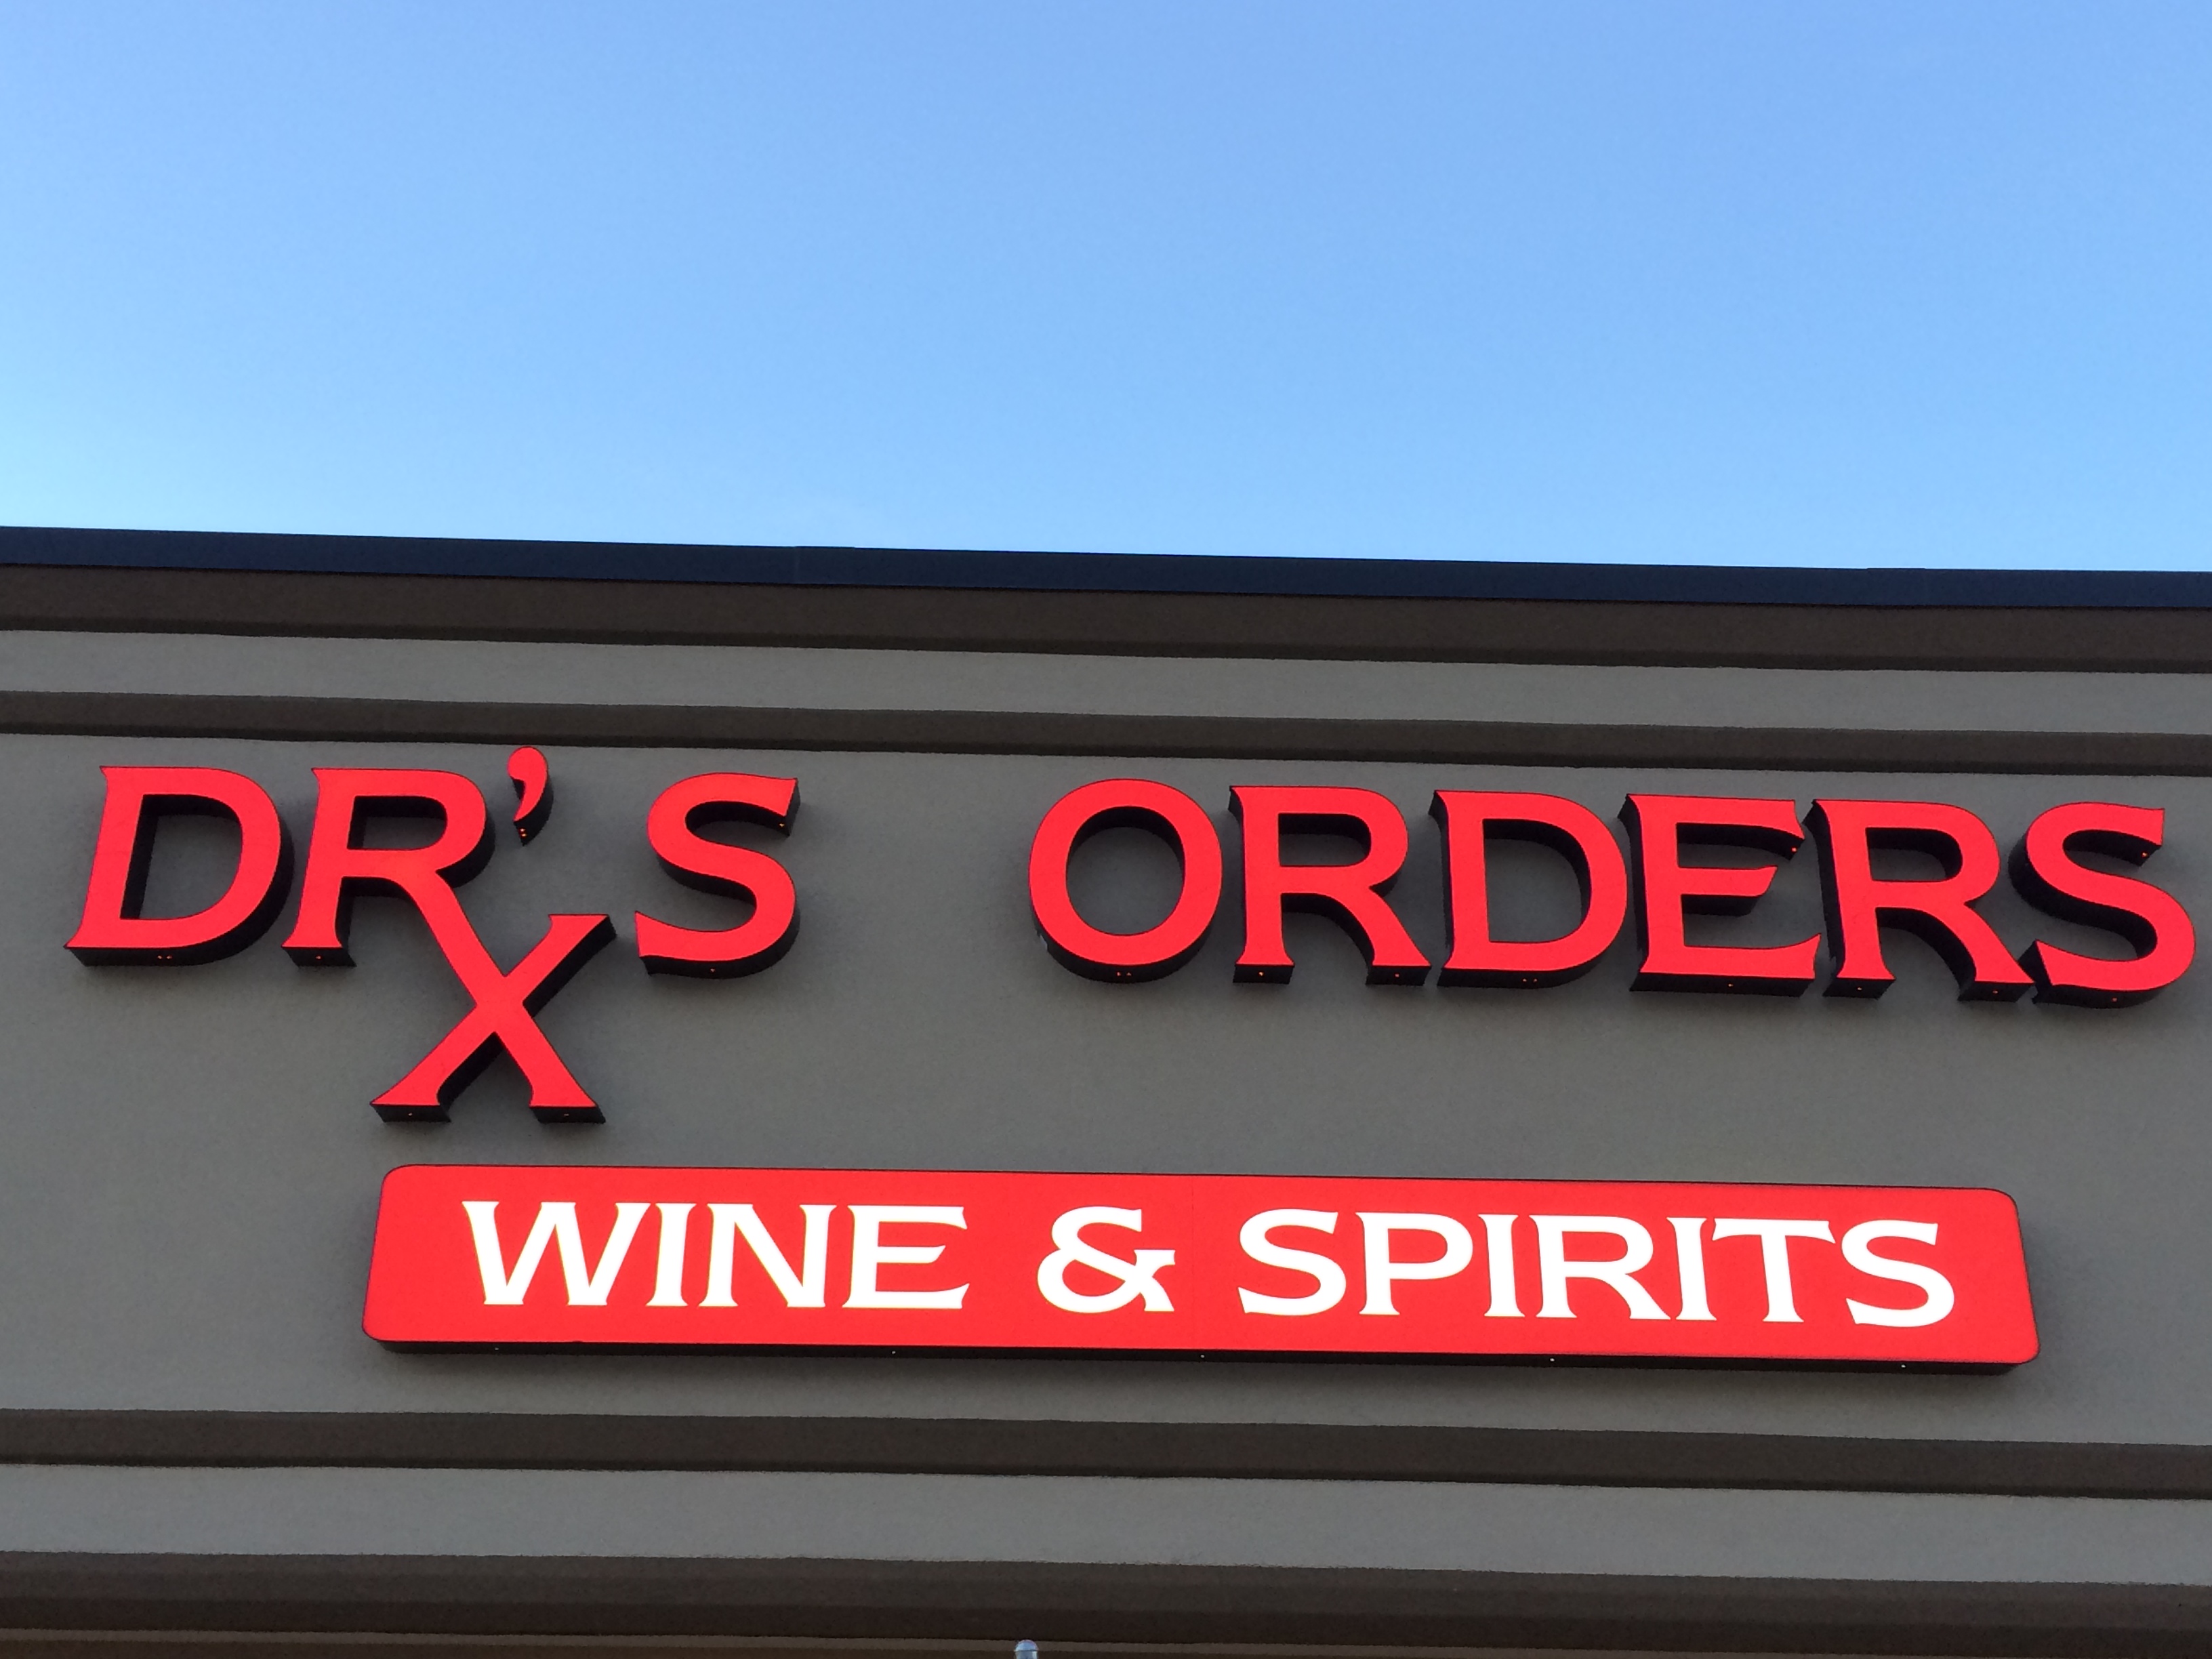 Dr's Orders Wine & Spirits